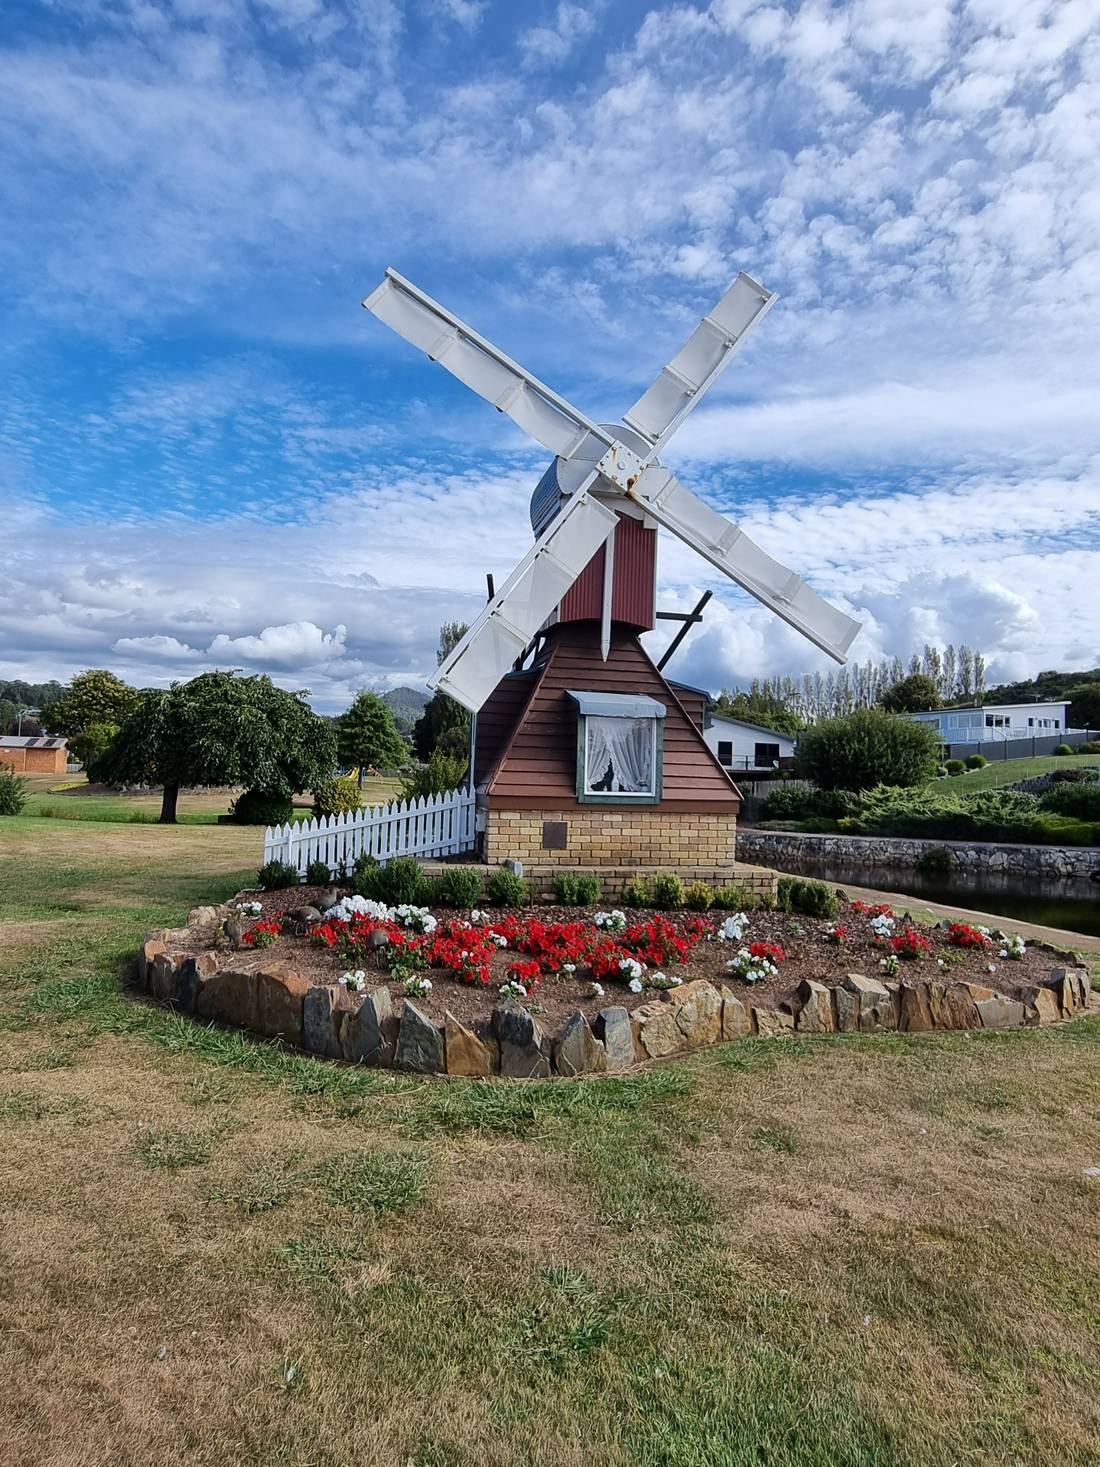 A windmill; a tribute to Dutch migrants.